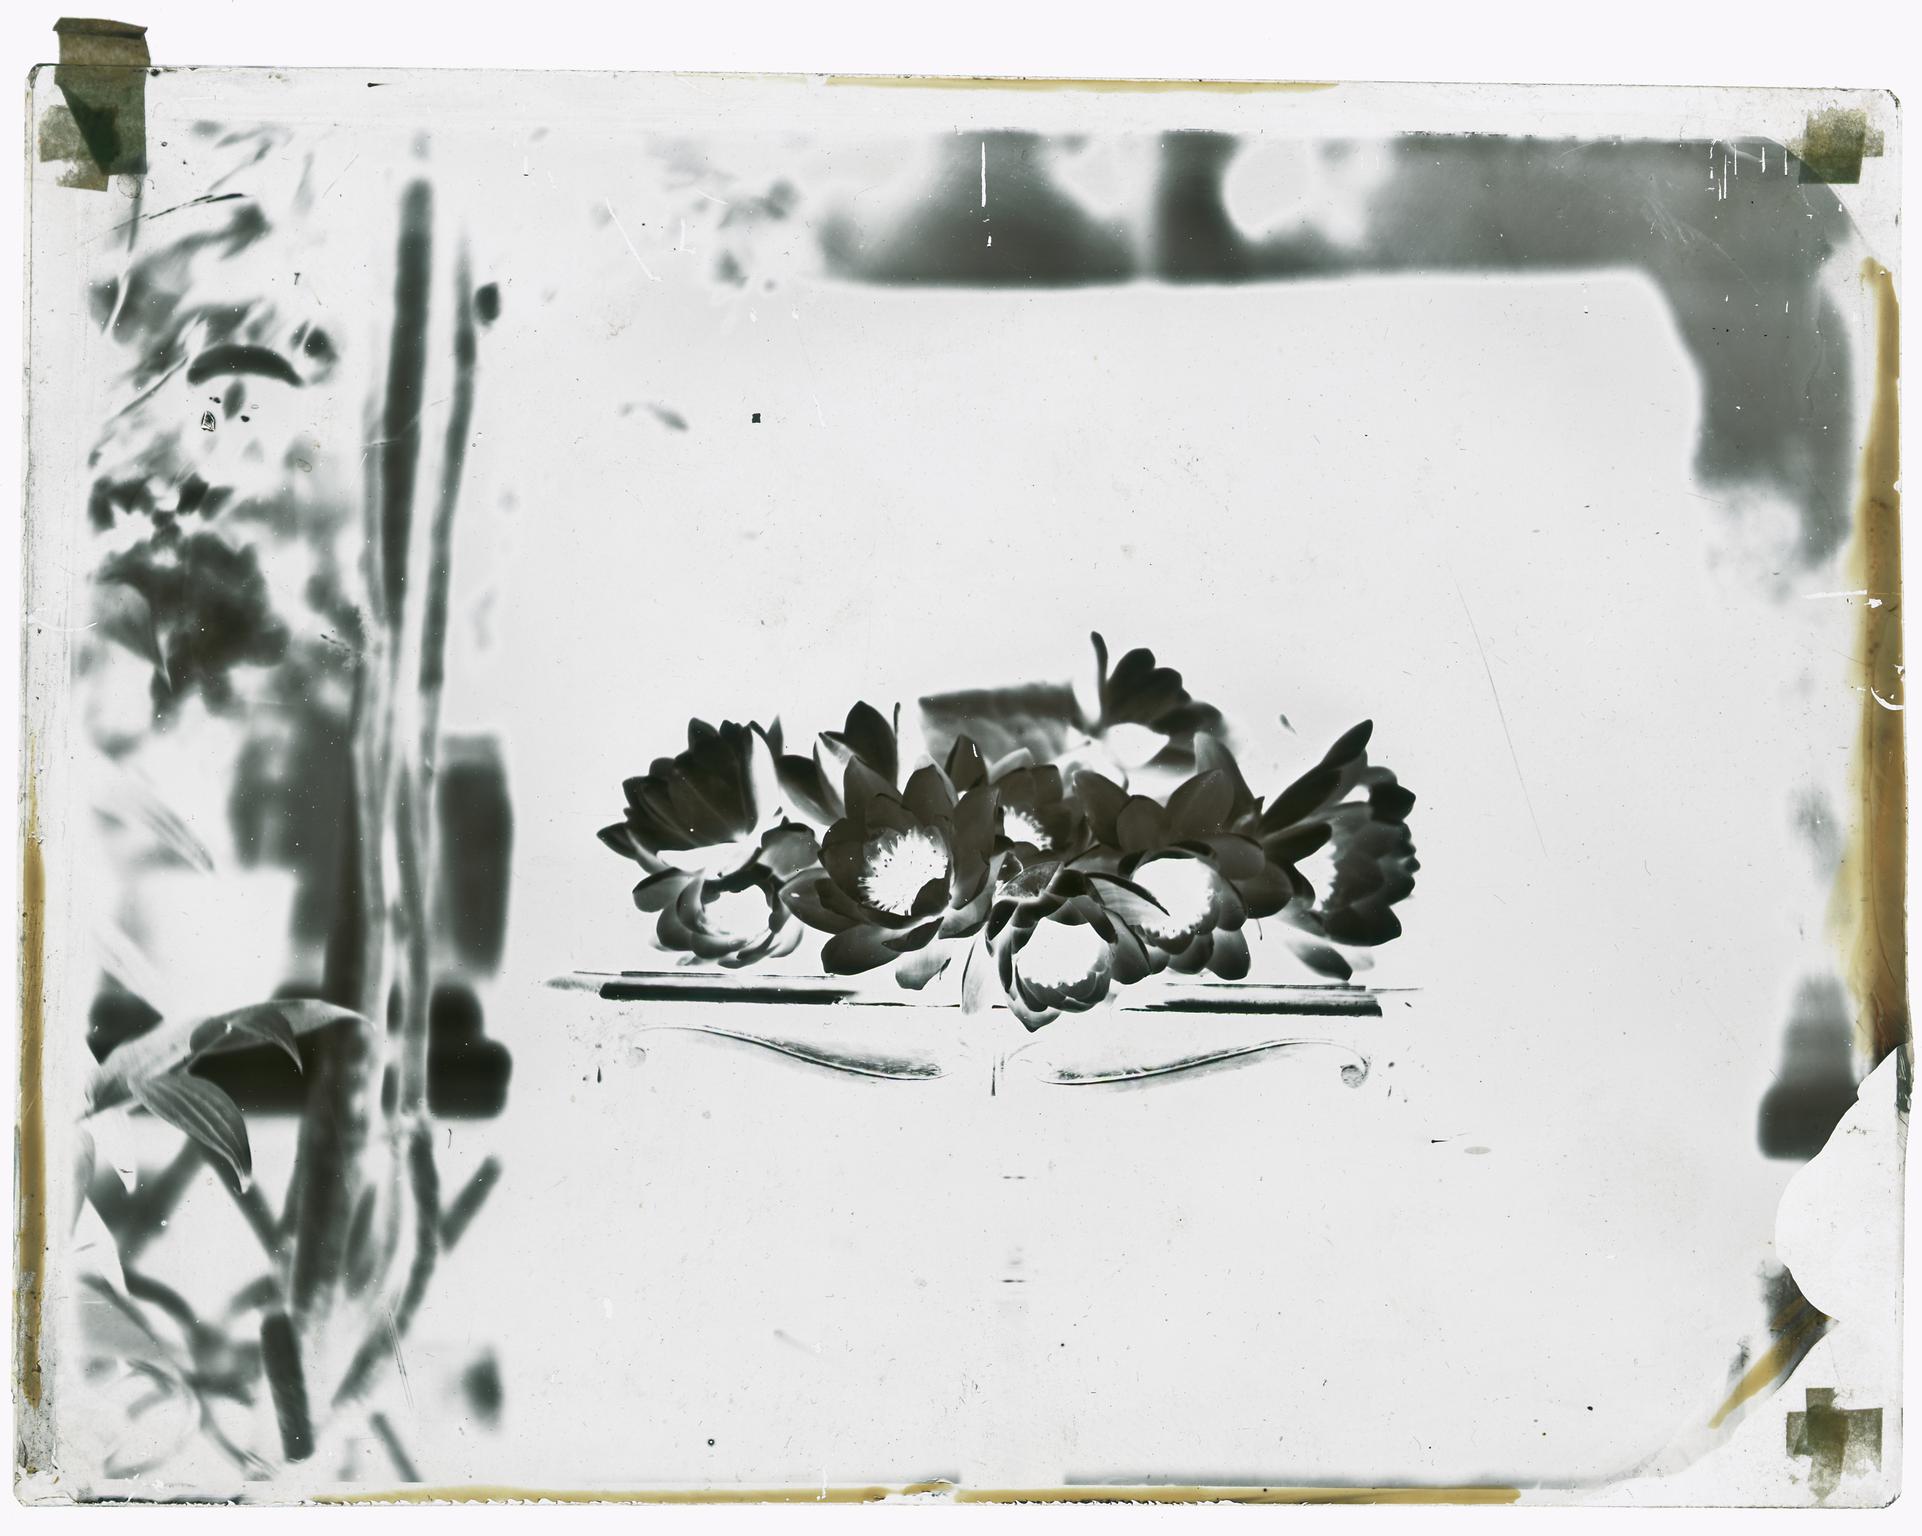 Water lilies, glass negative